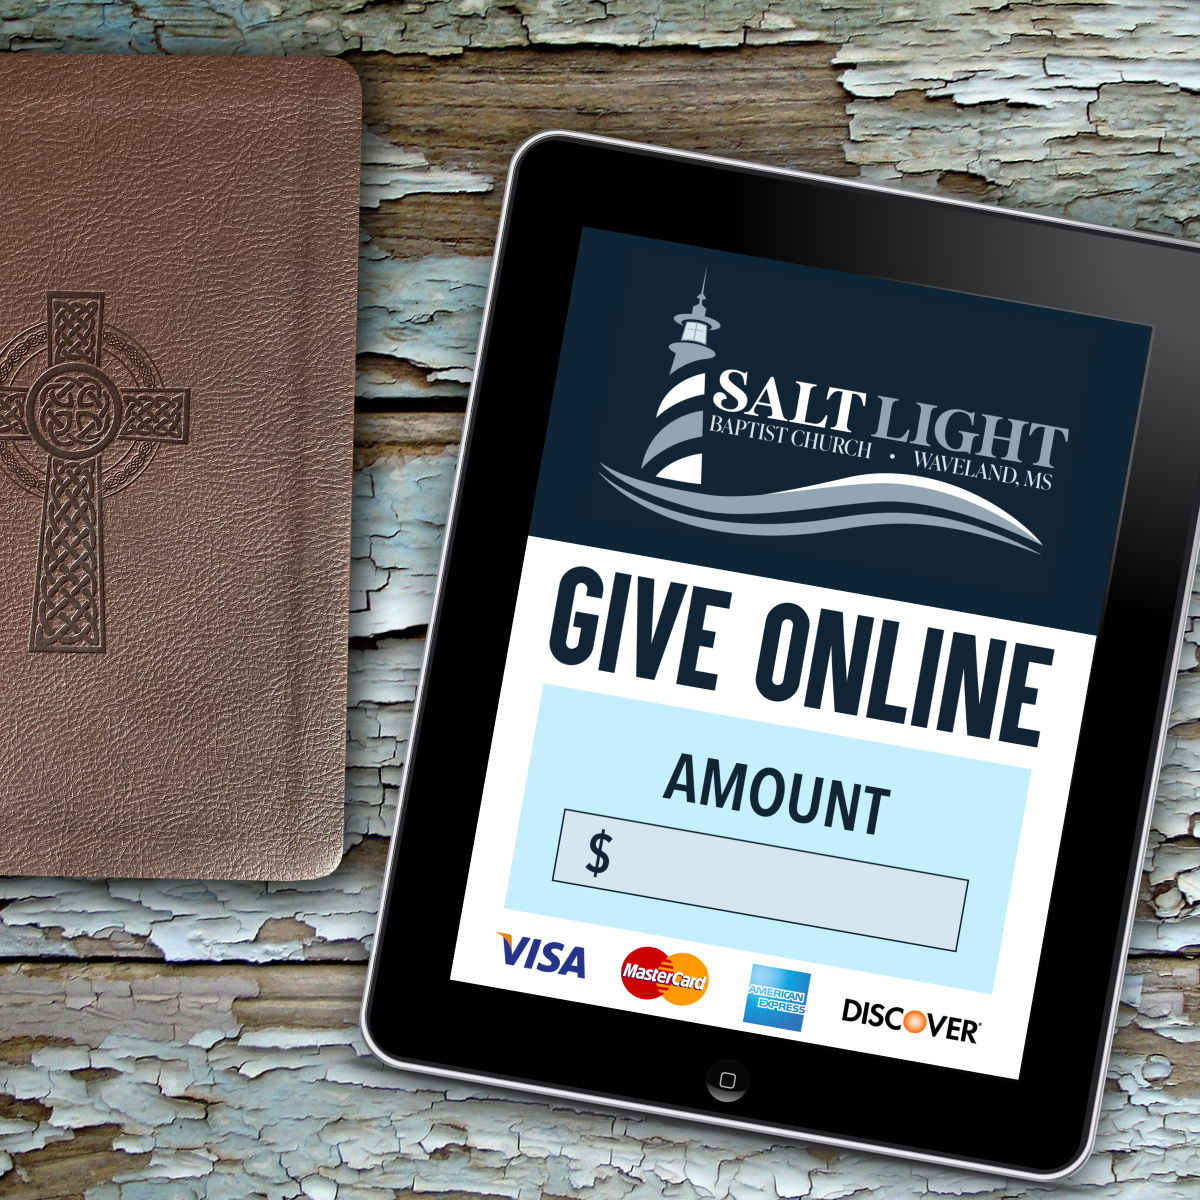 Salt Light Baptist Church | Online Giving